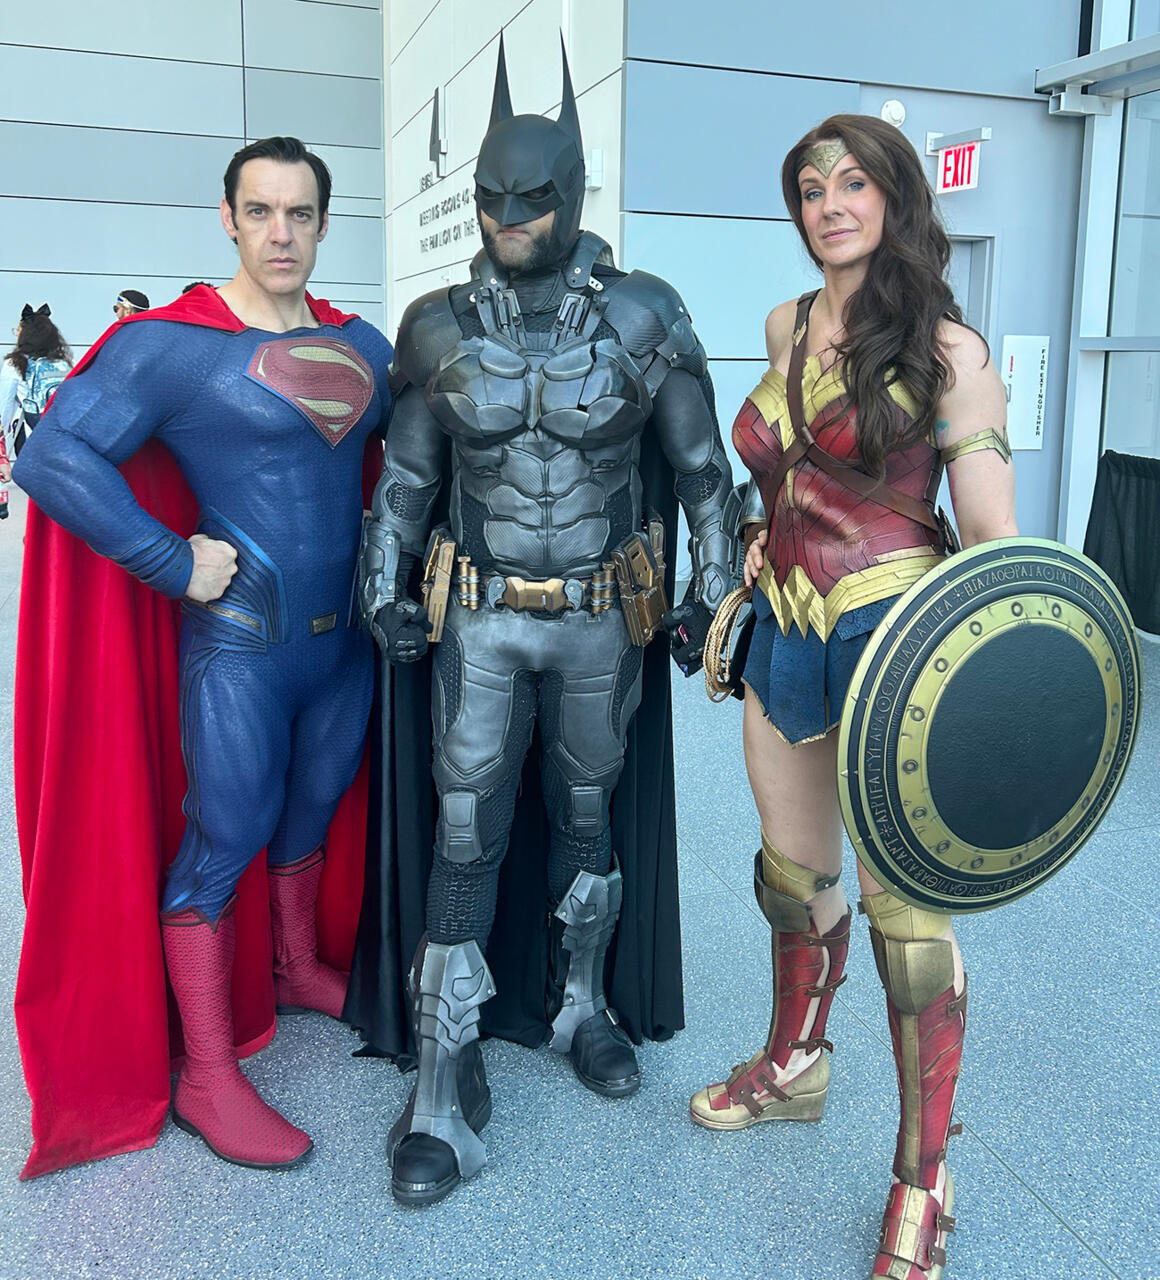 Superman, Batman, and Wonder Woman